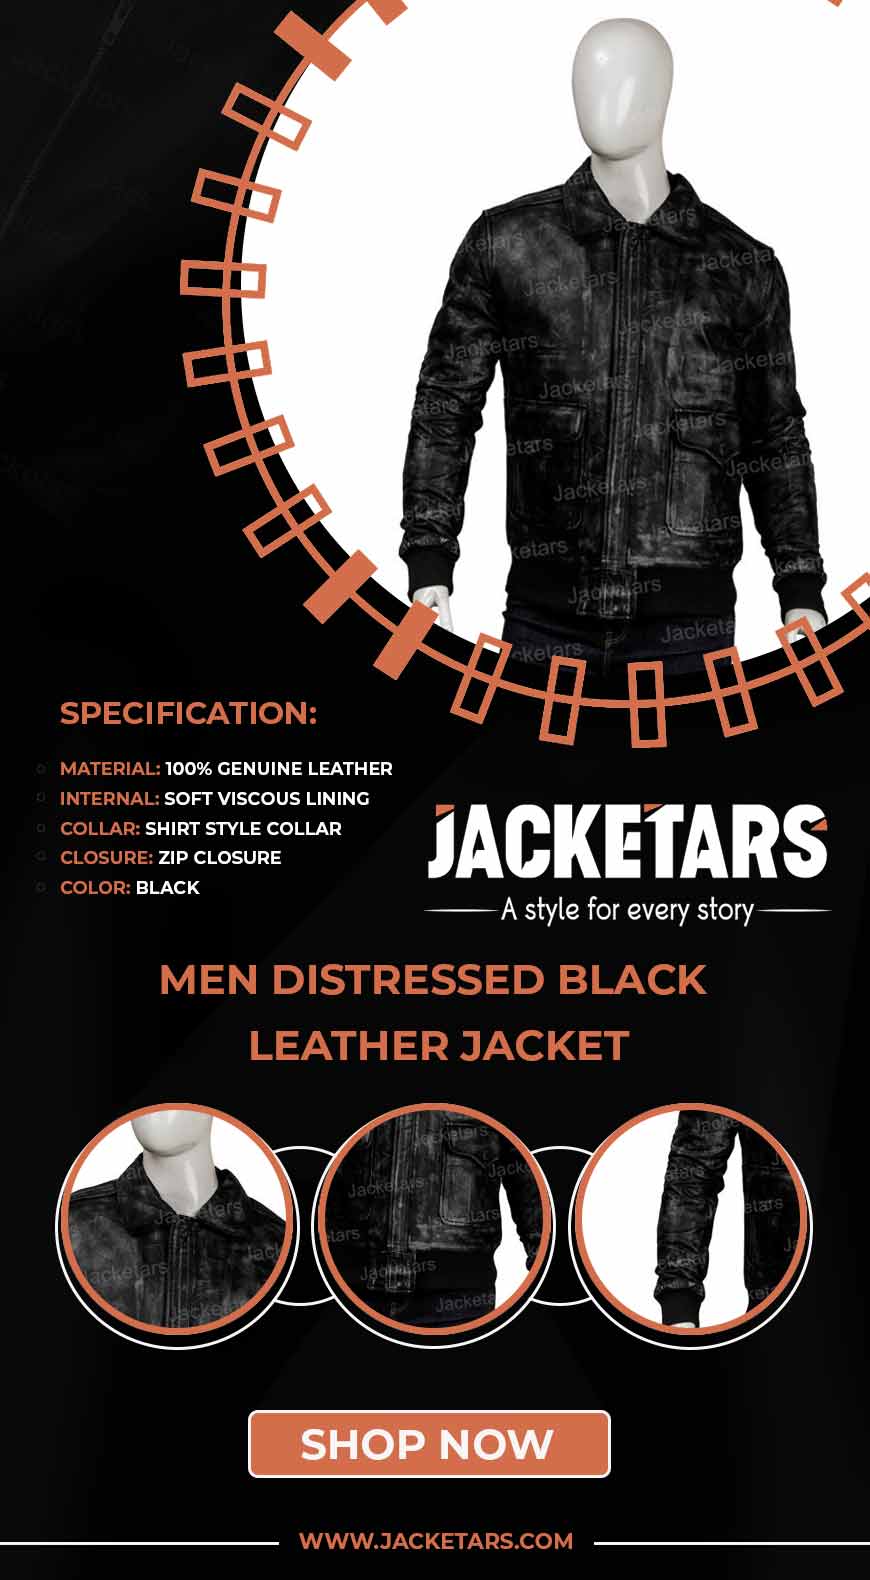 Men Distressed Black Leather Jacket info